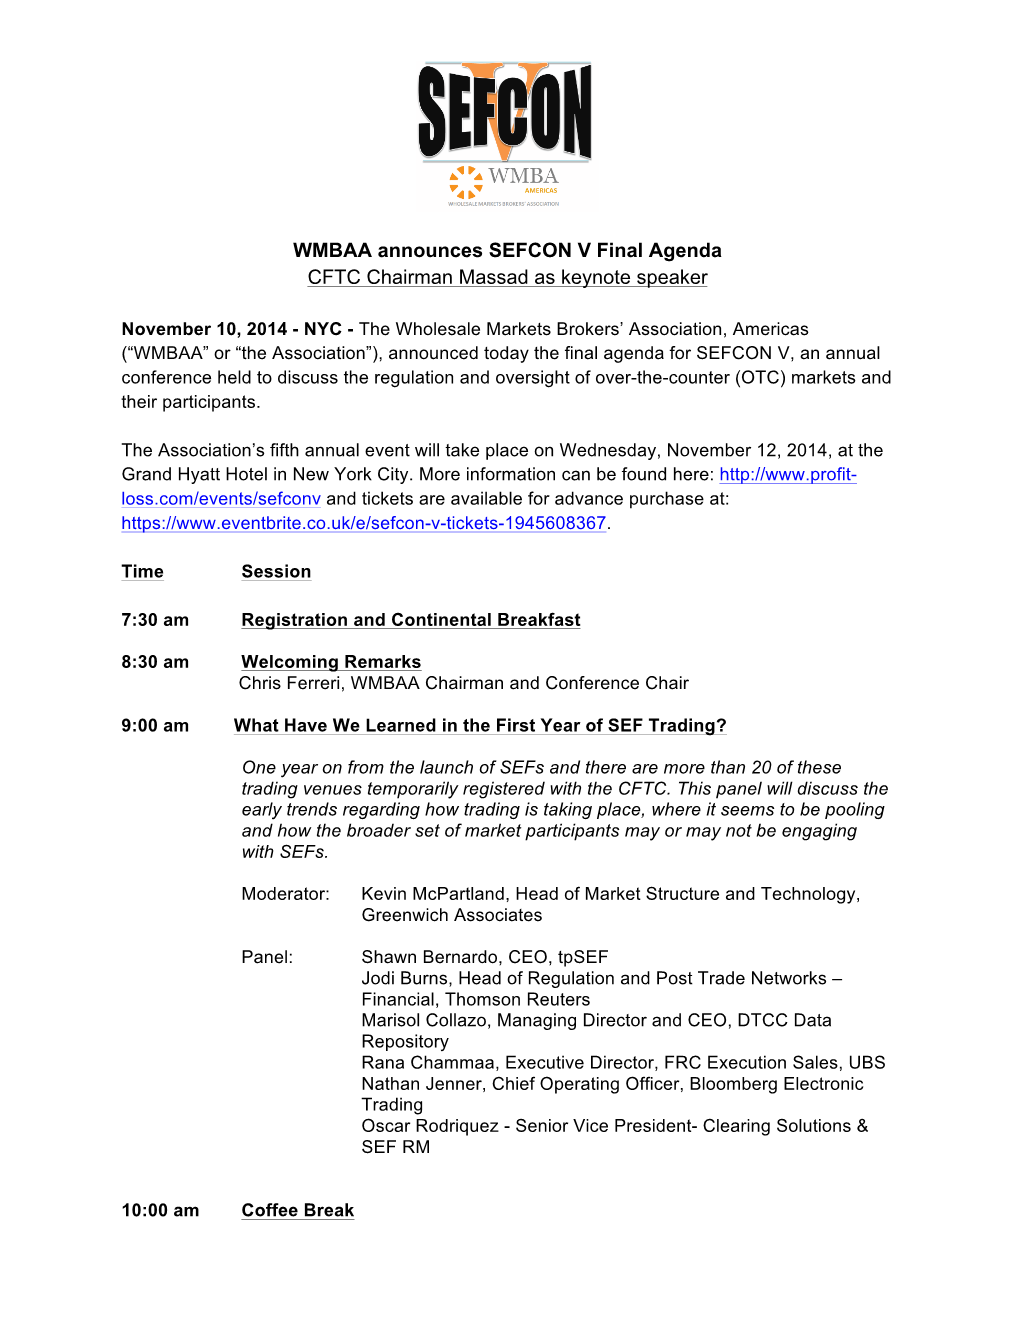 WMBAA Announces SEFCON V Final Agenda CFTC Chairman Massad As Keynote Speaker